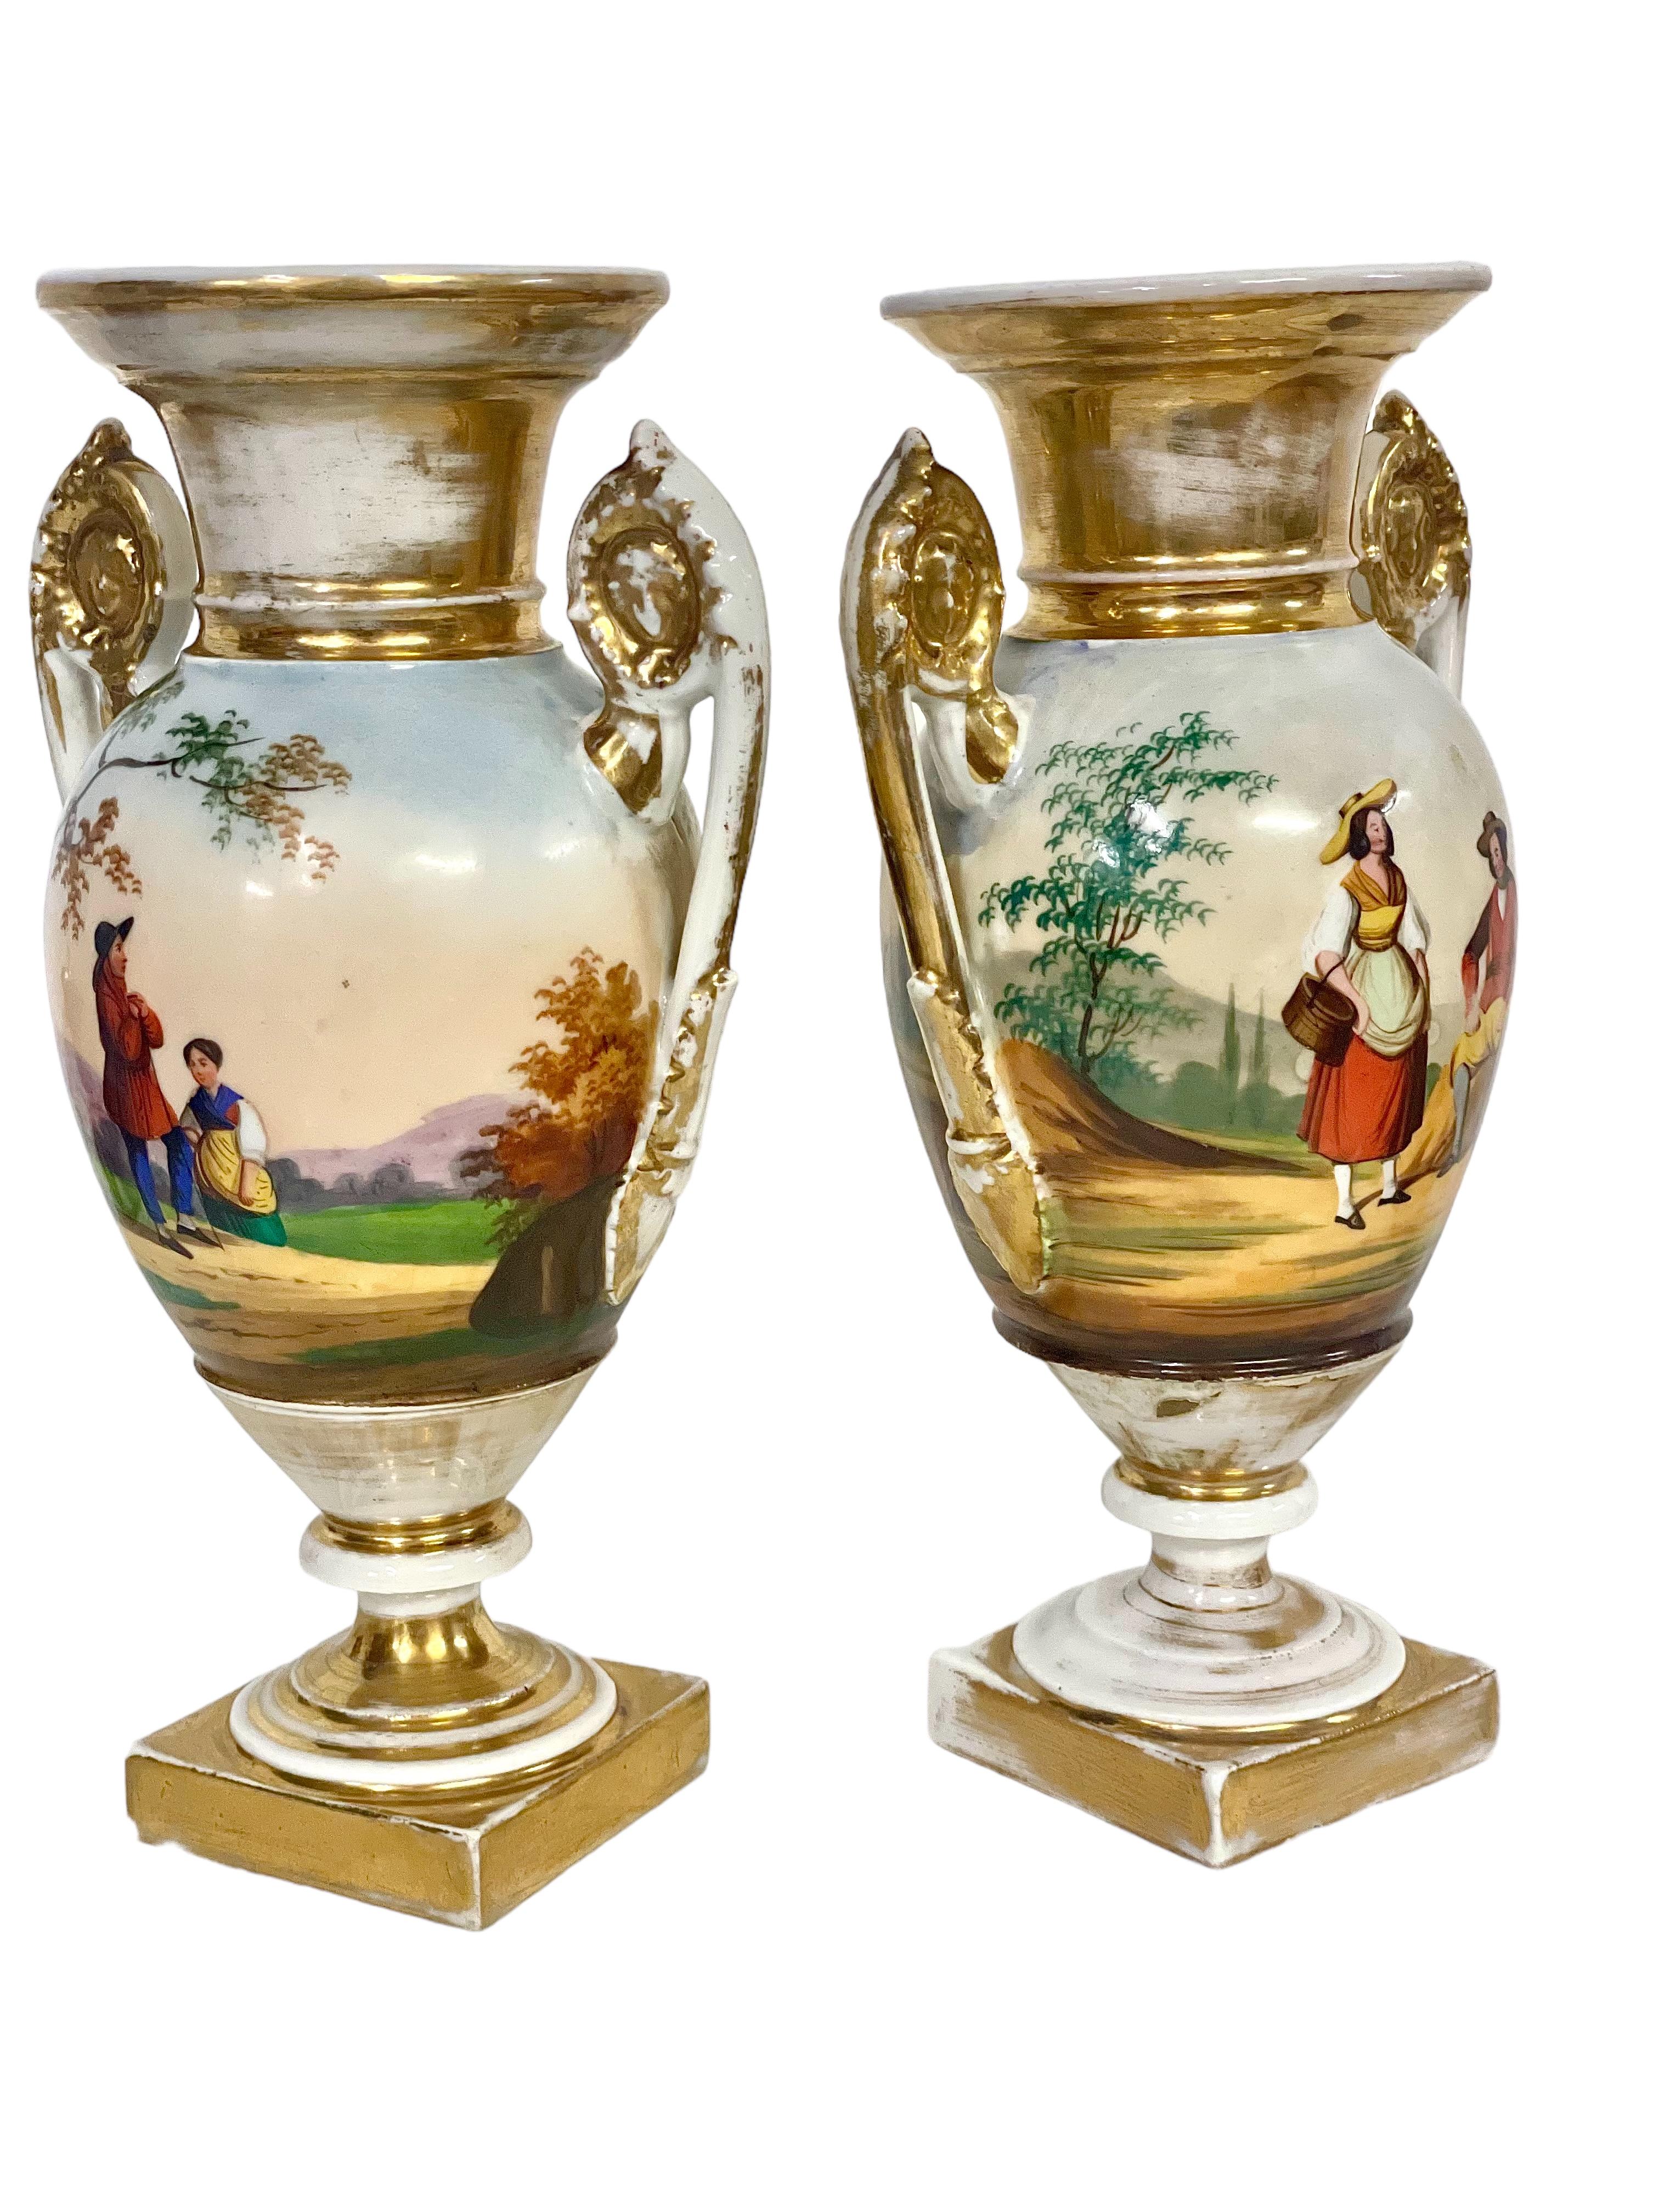 19th Century Pair of Hand-Painted Paris Porcelain Urns  For Sale 3